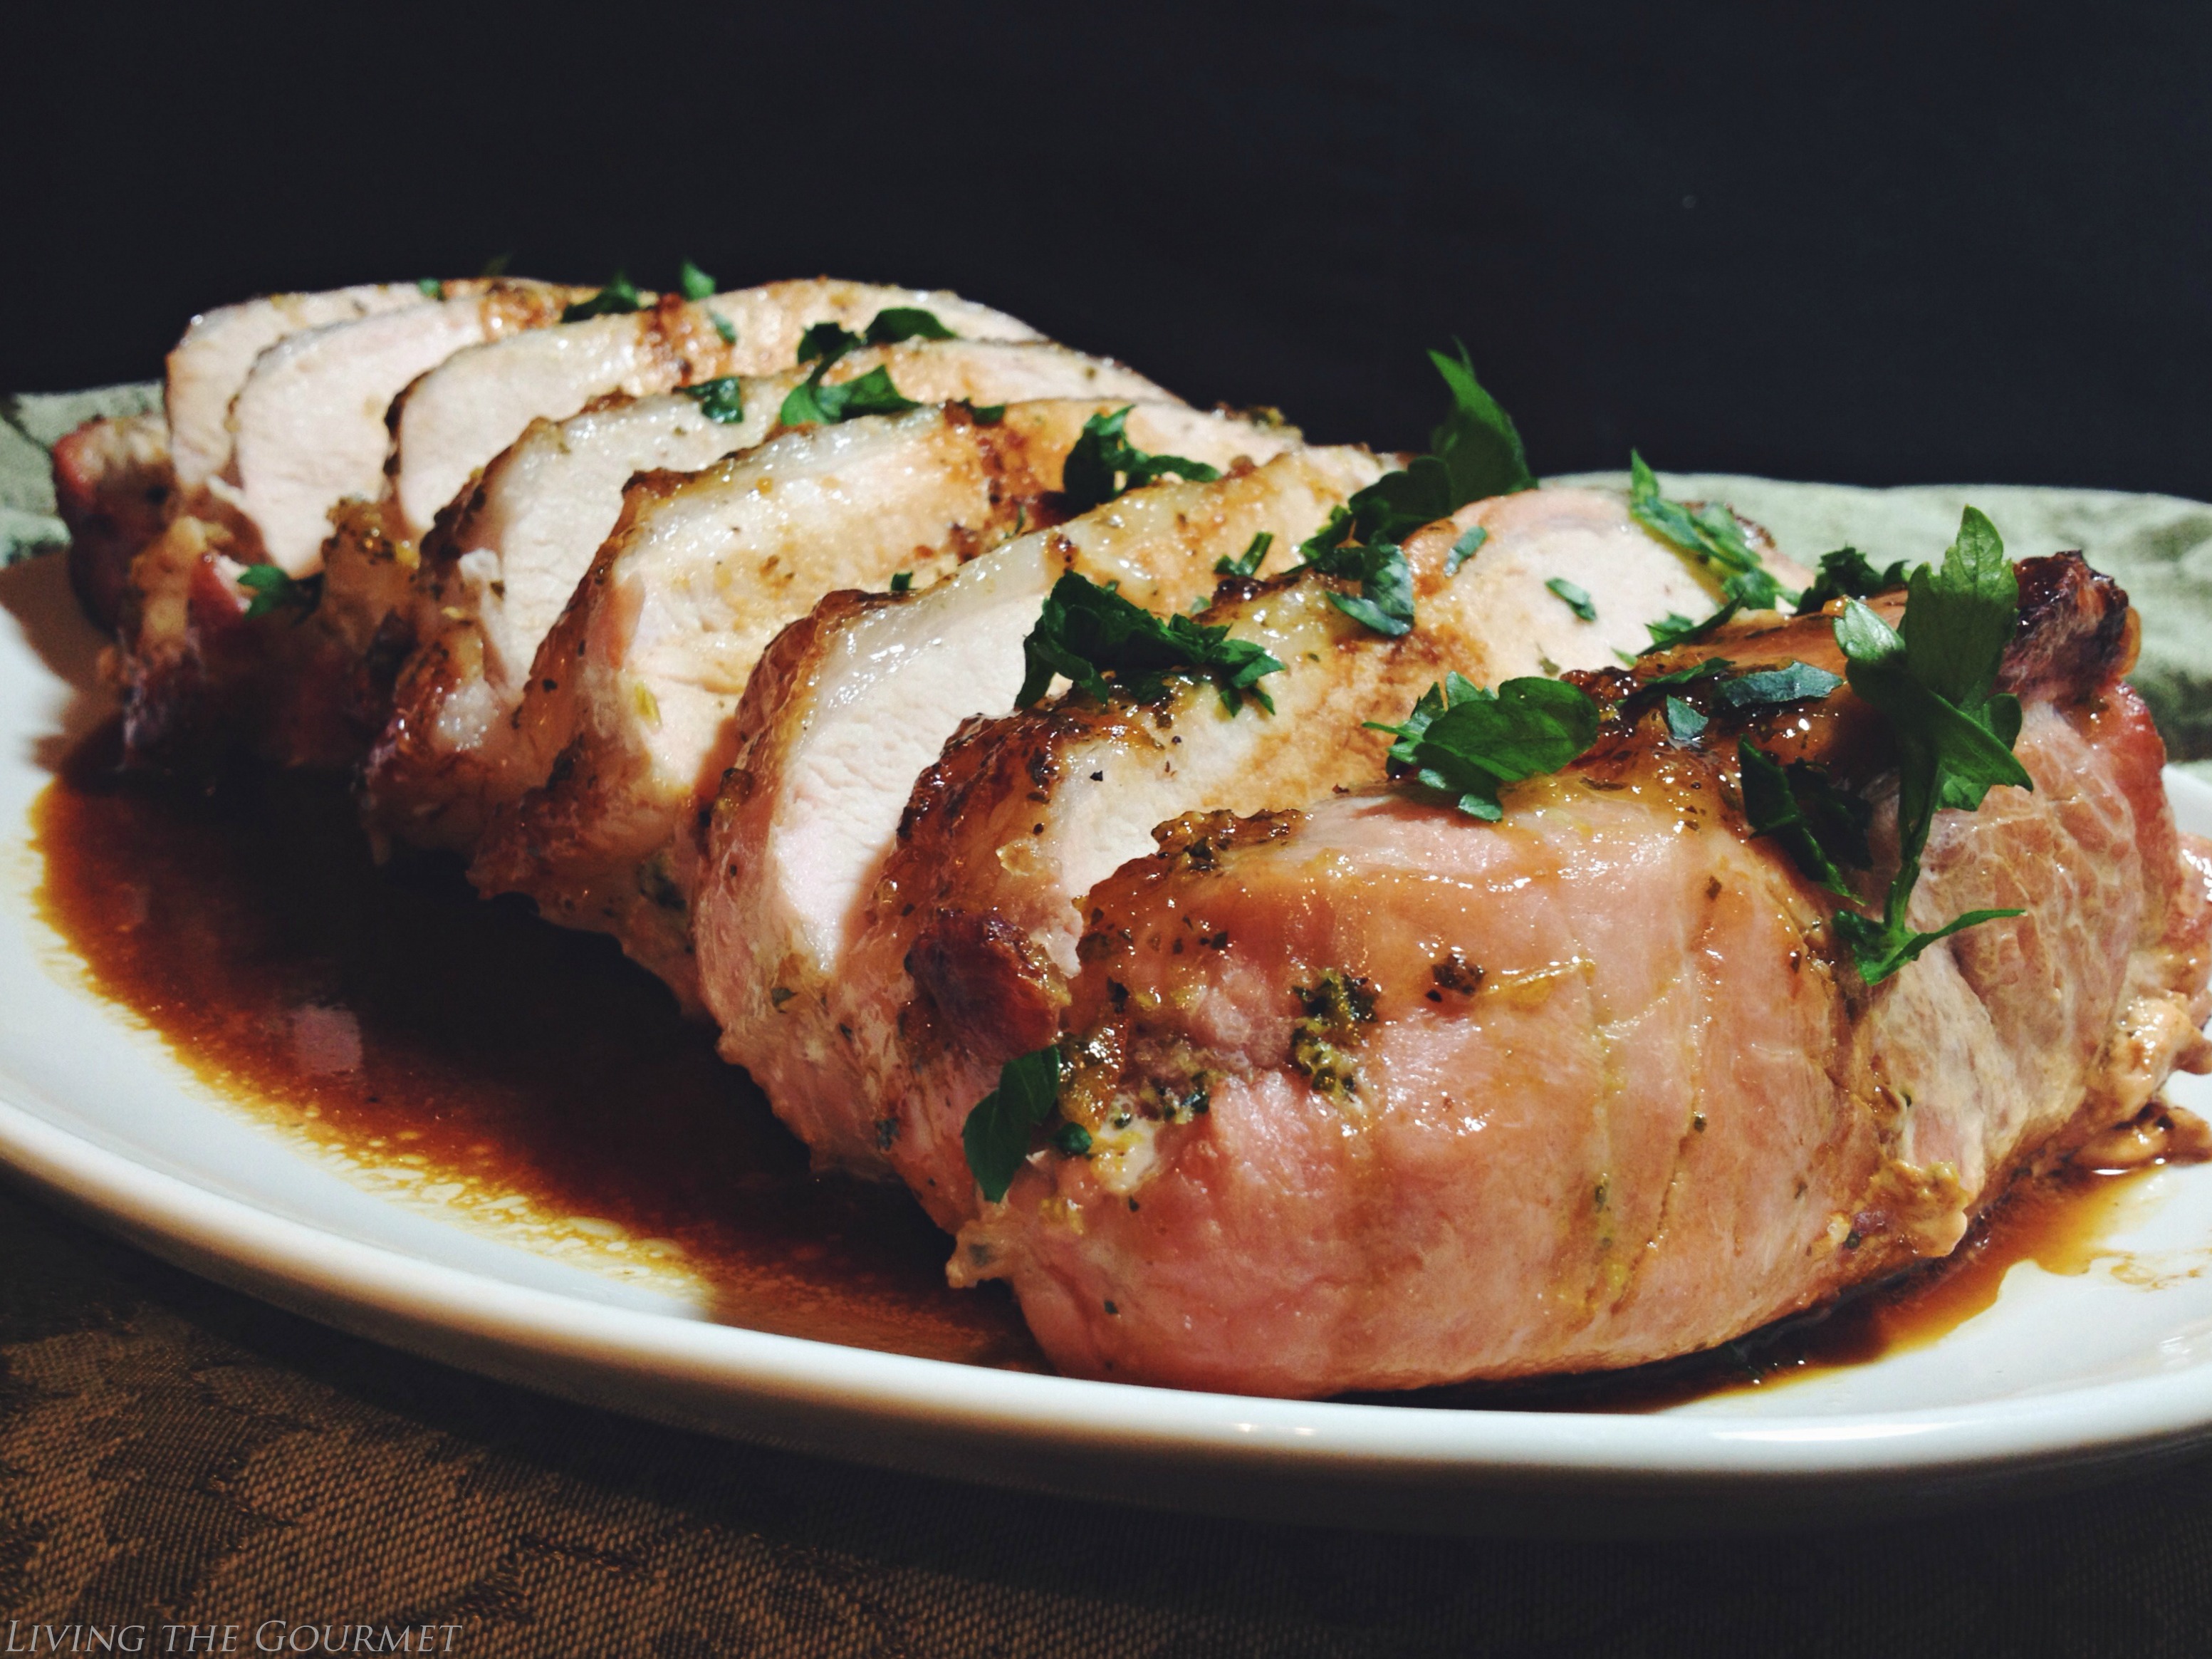 Living the Gourmet: Boneless Roast Pork Loin with Marmalade Sauce